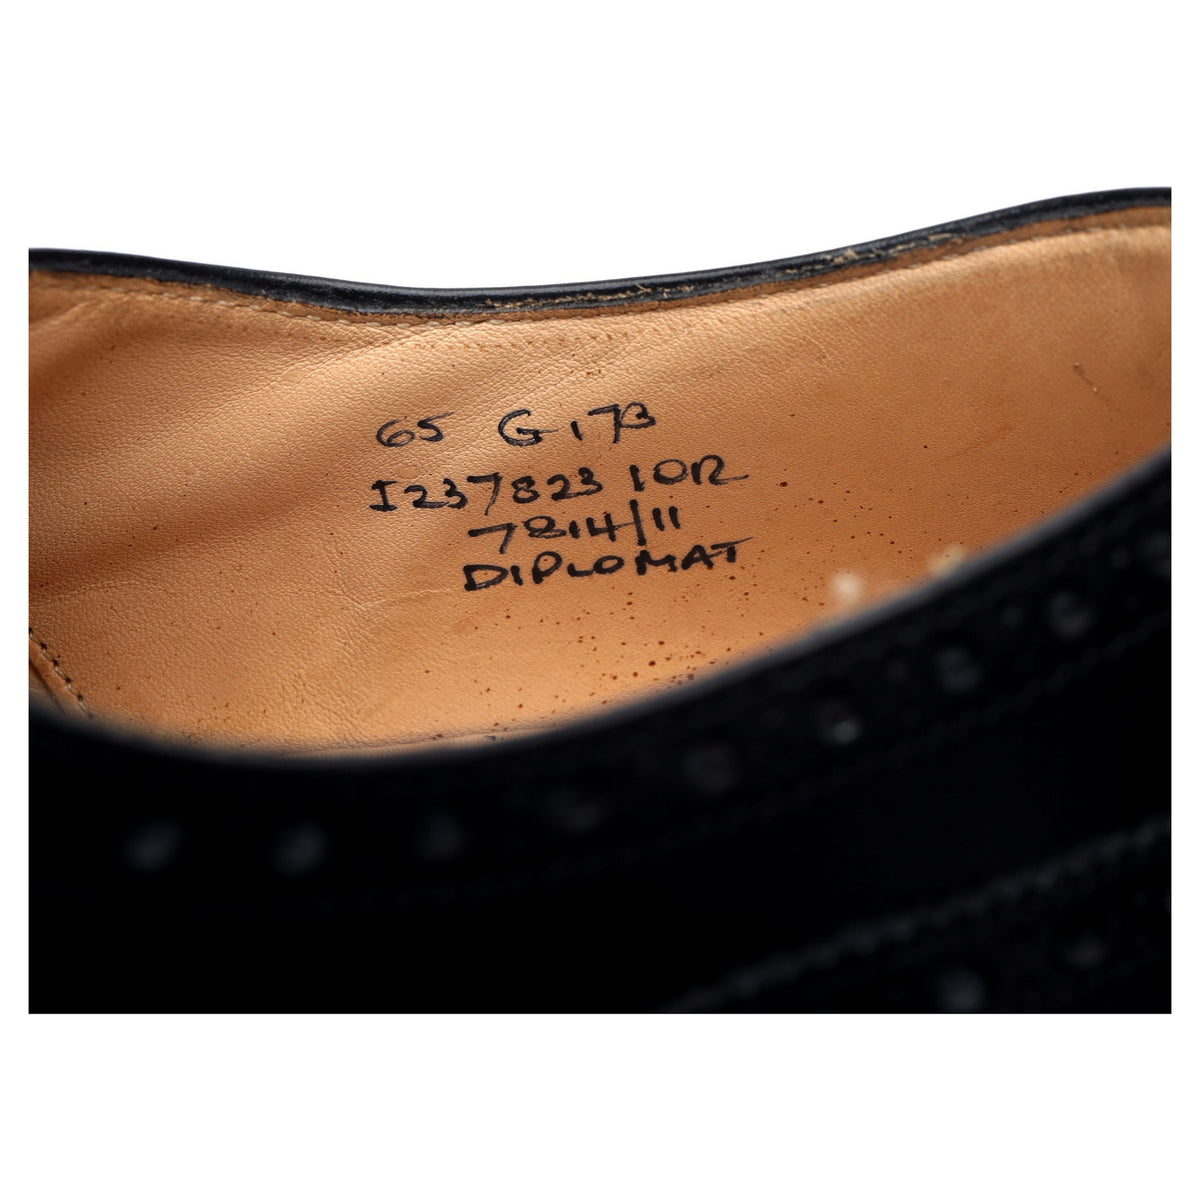 &#39;Diplomat&#39; Black Leather Oxford Brogues UK 6.5 G